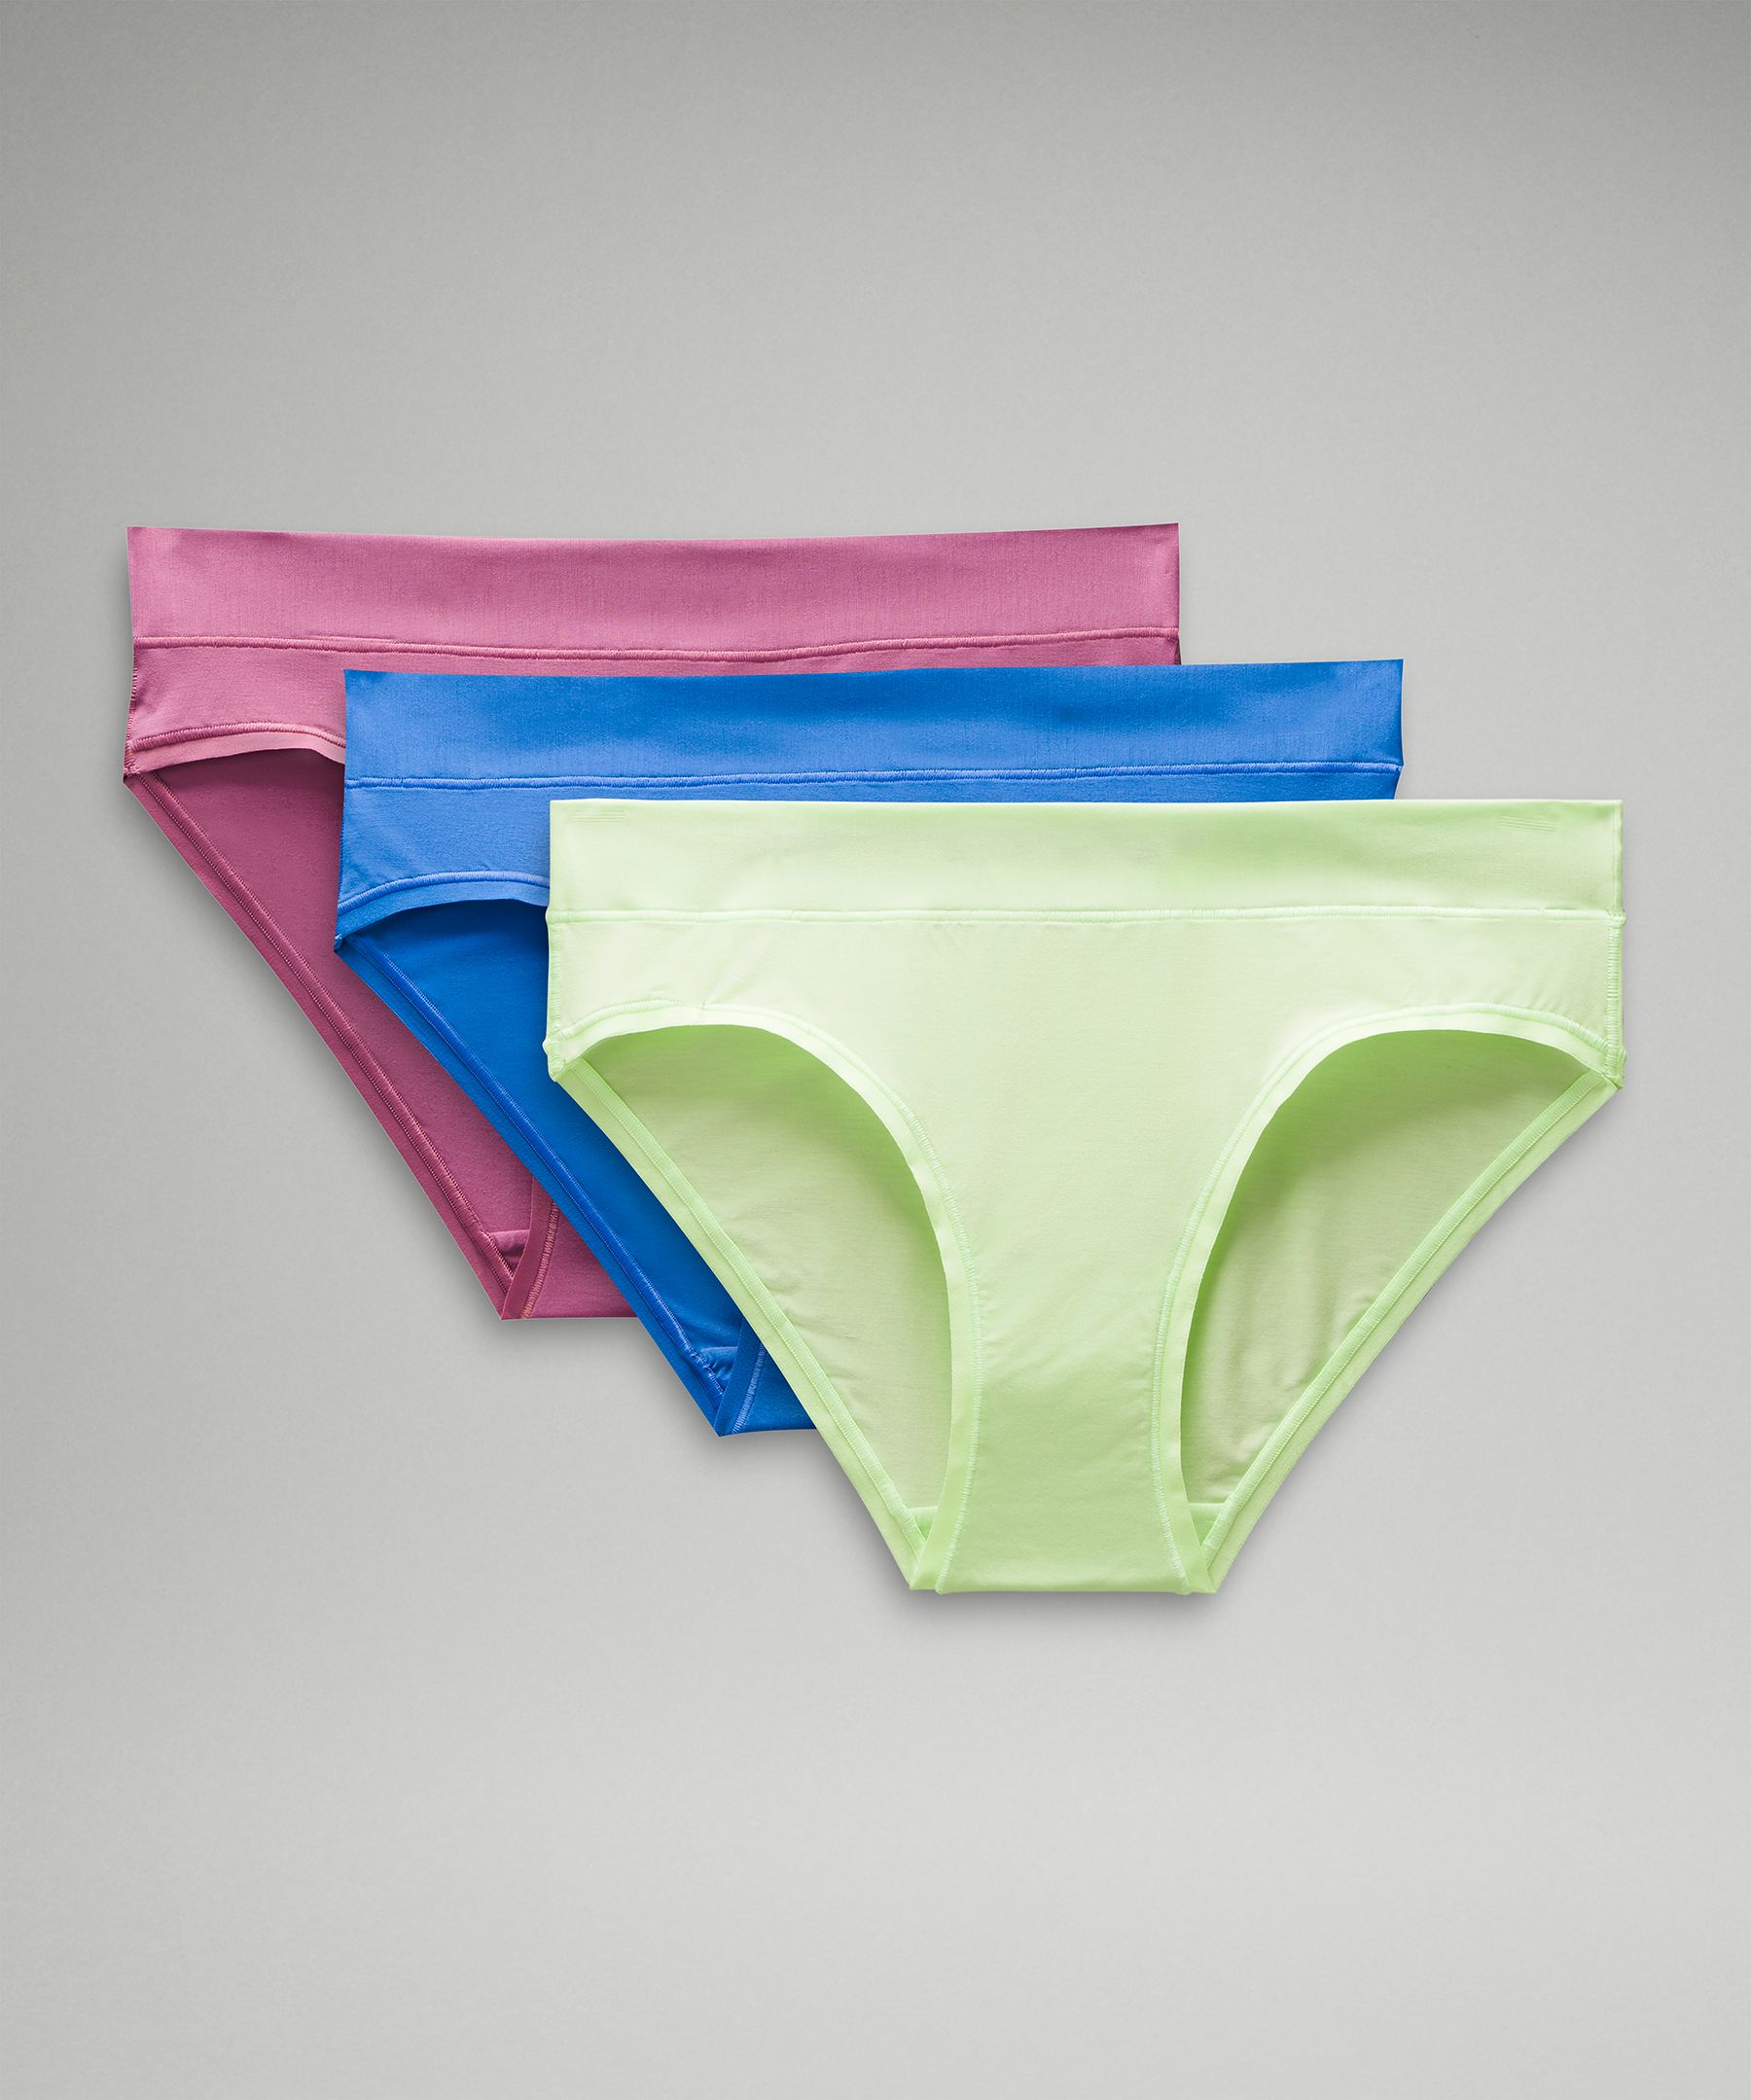 Lululemon UnderEase Mid-Rise Cheeky Bikini Underwear 3 Pack